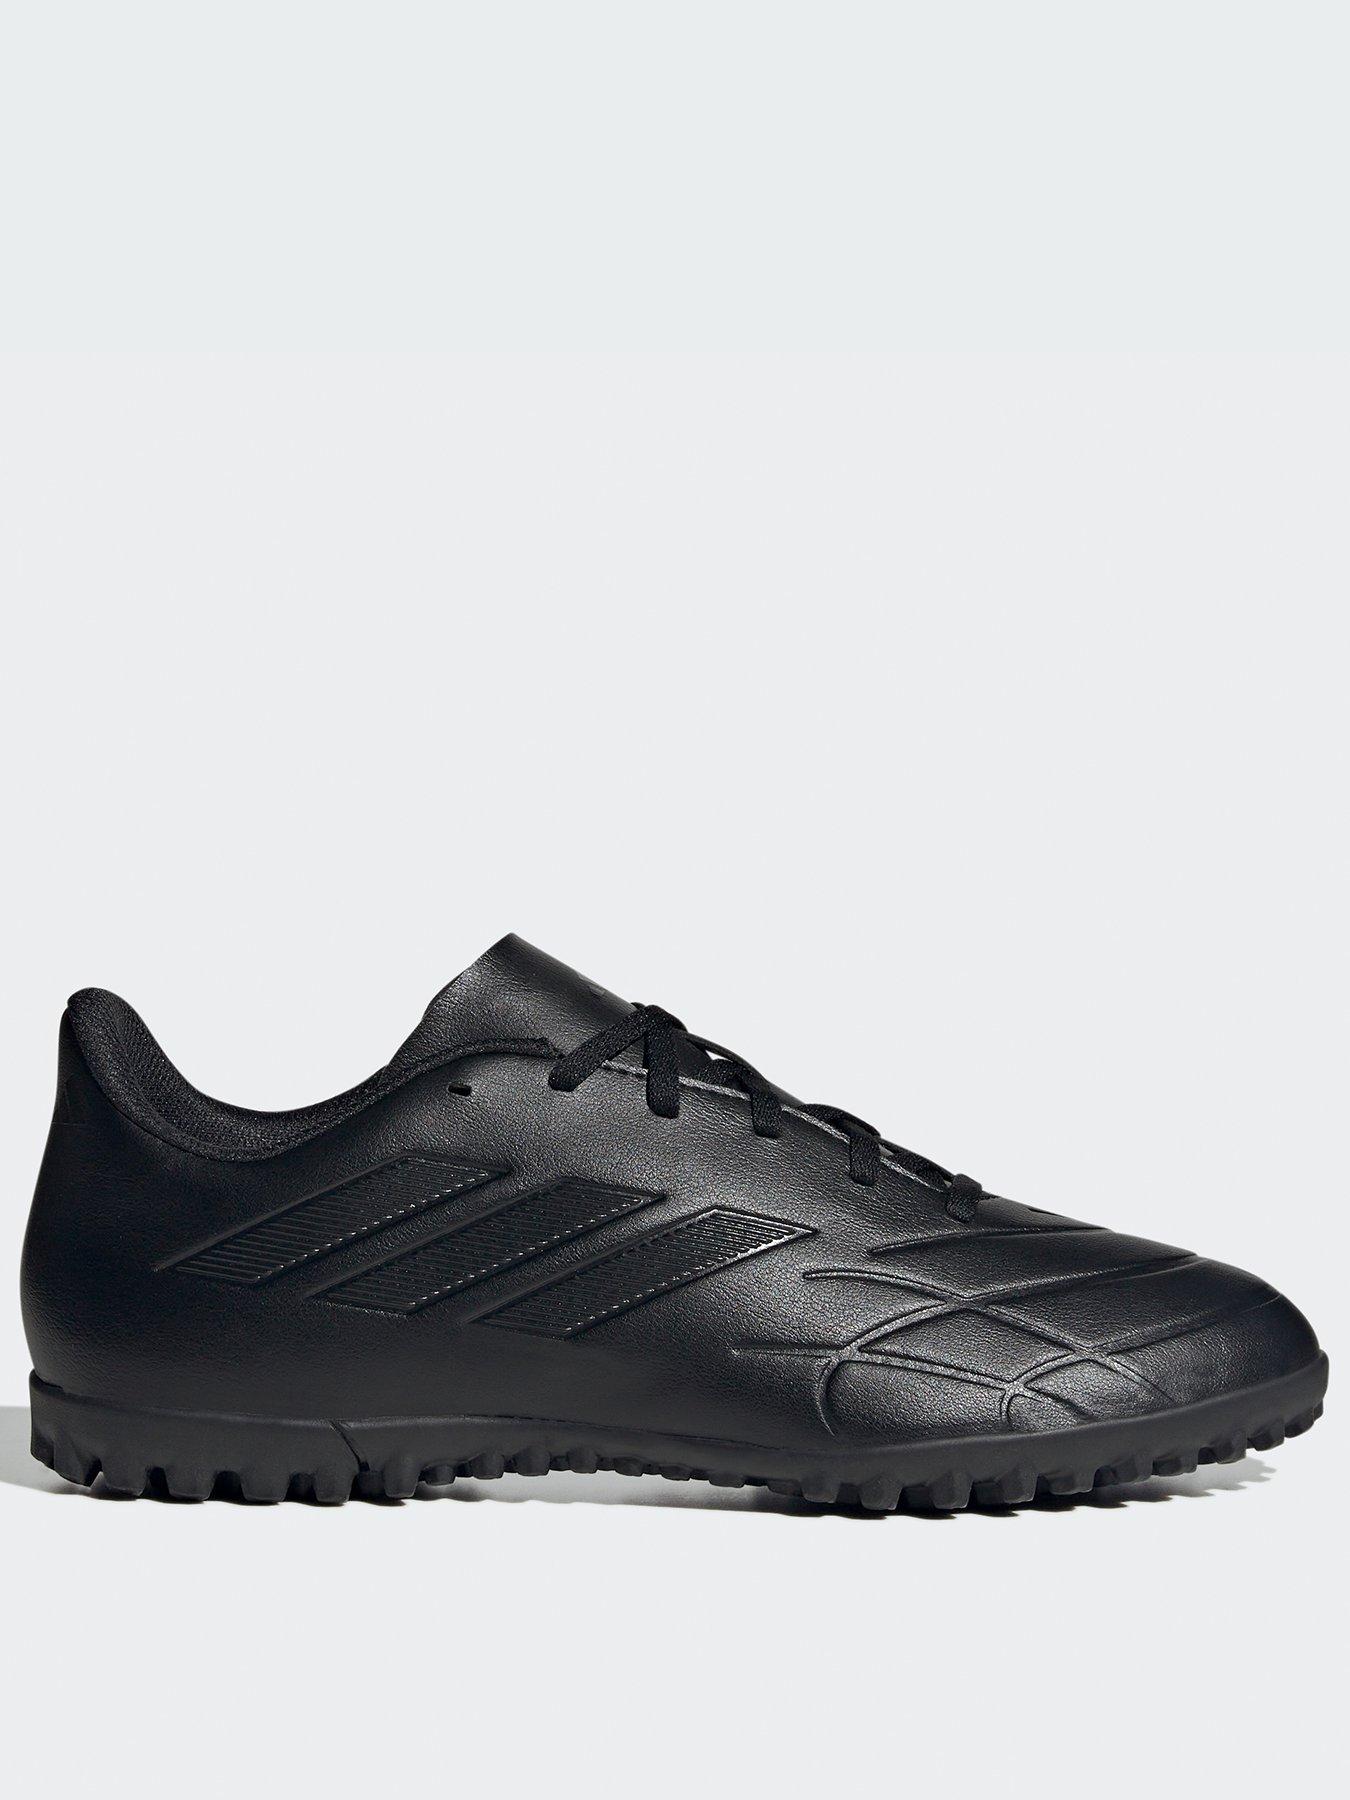 Adidas Copa Sense .4 Astro Turf Football Boots - Black